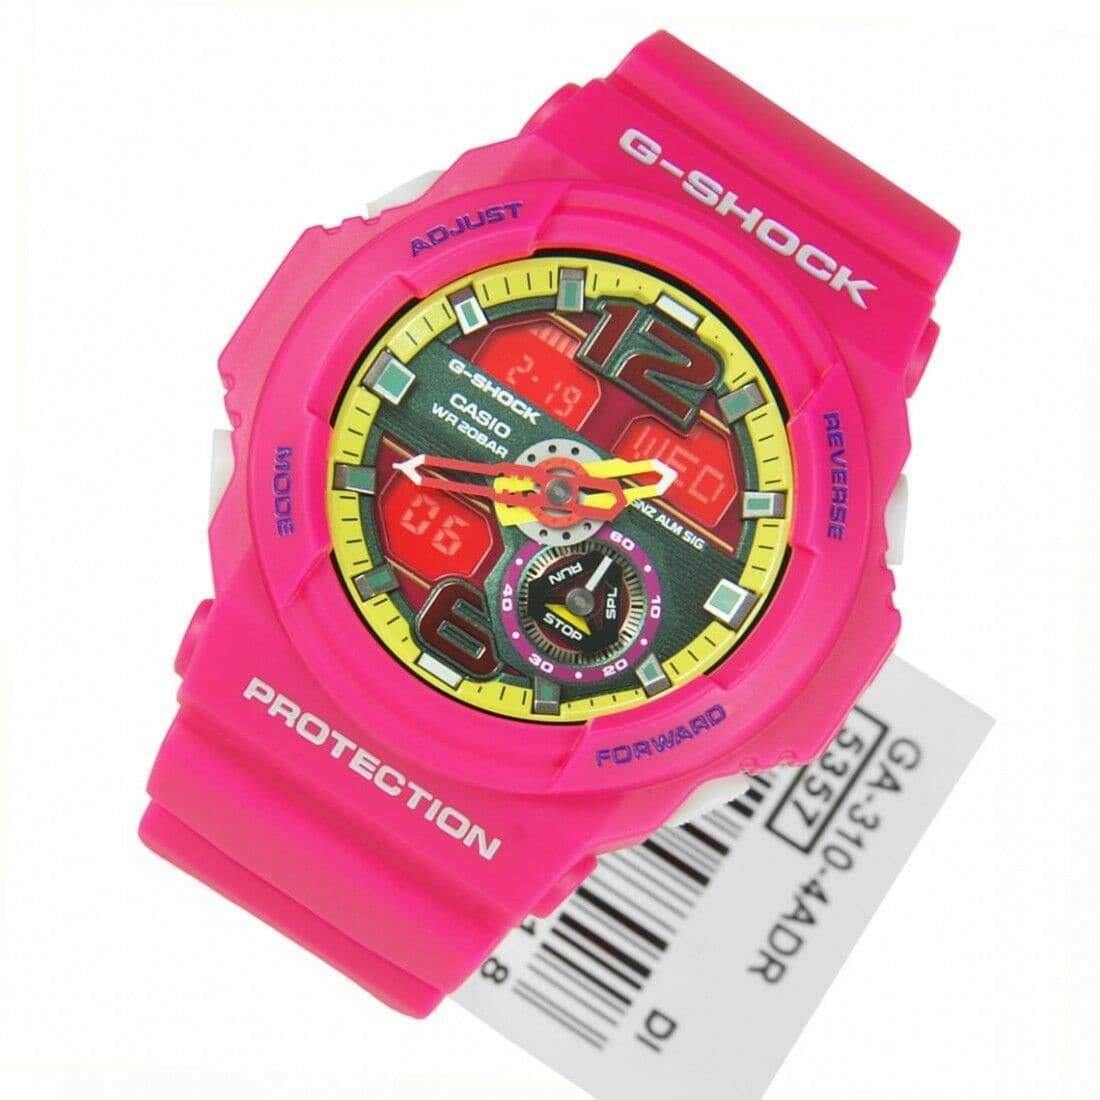 Casio G-Shock Big Size Series Anadigi Pink x Yellow Accent Watch GA310-4ADR - Prestige